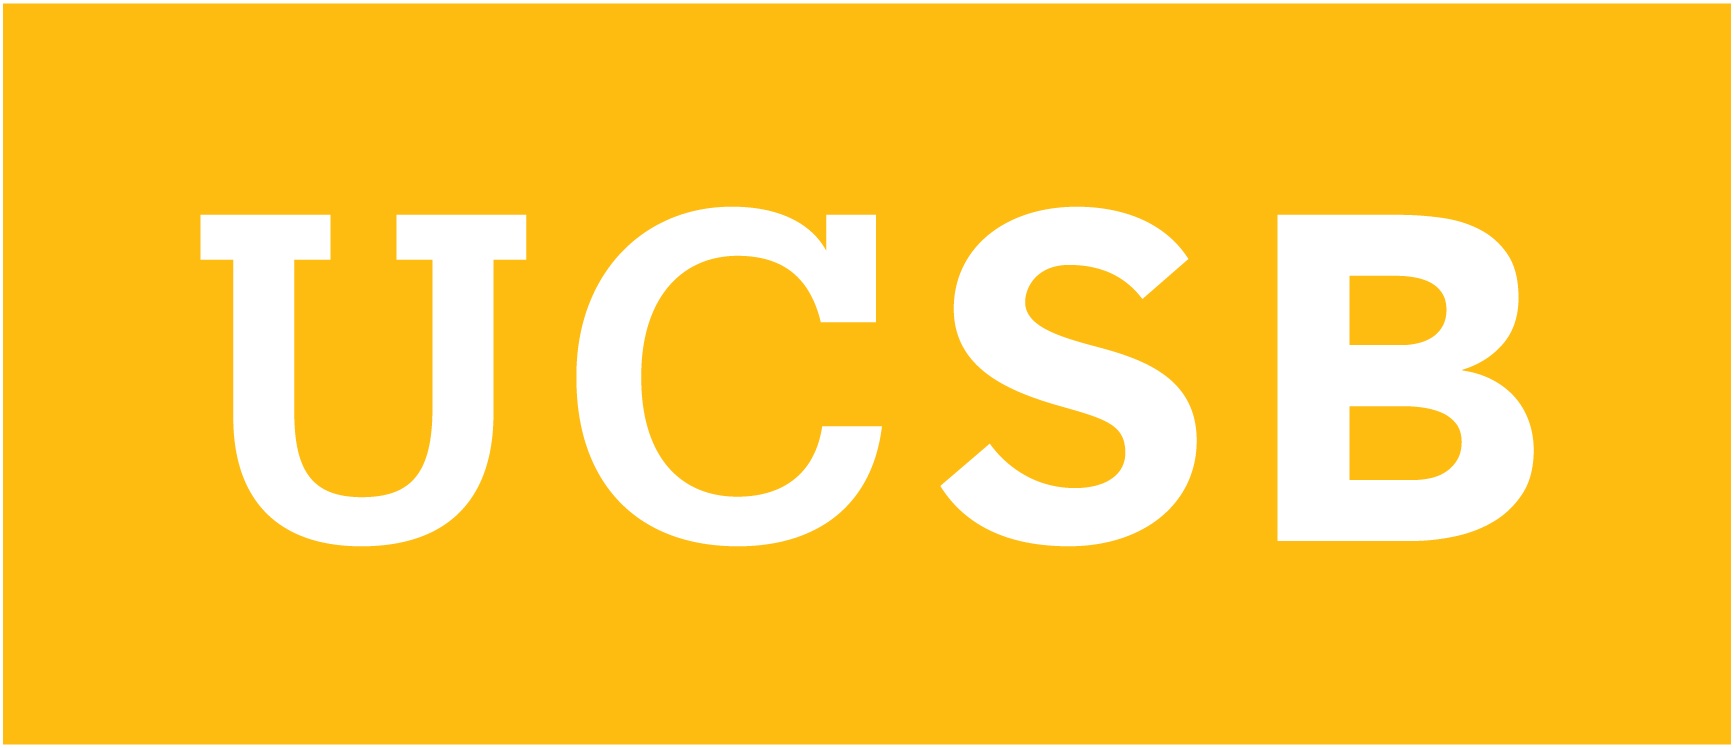 UCSB Gold Logo